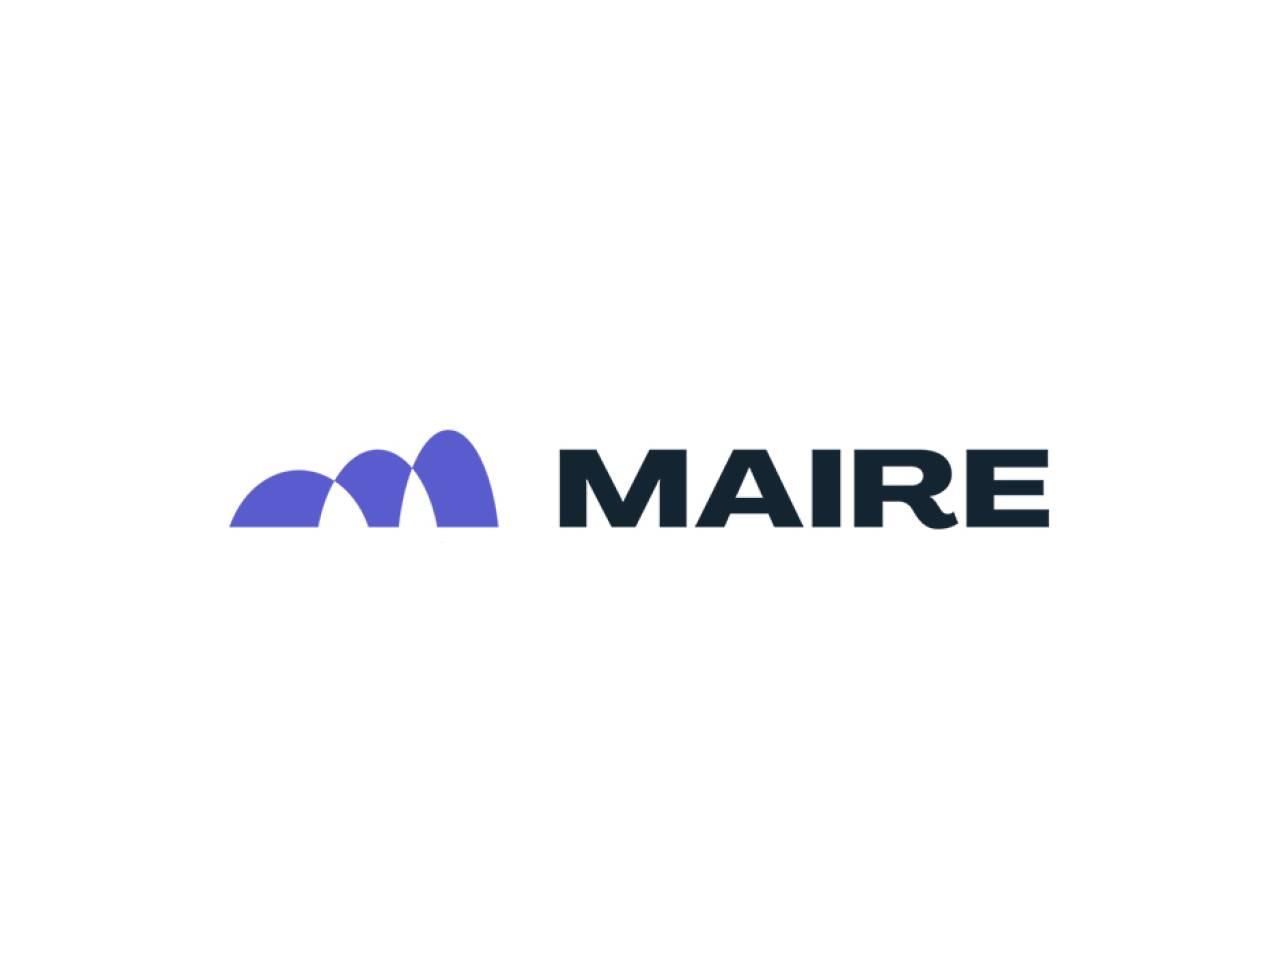 Maire logo_NEW